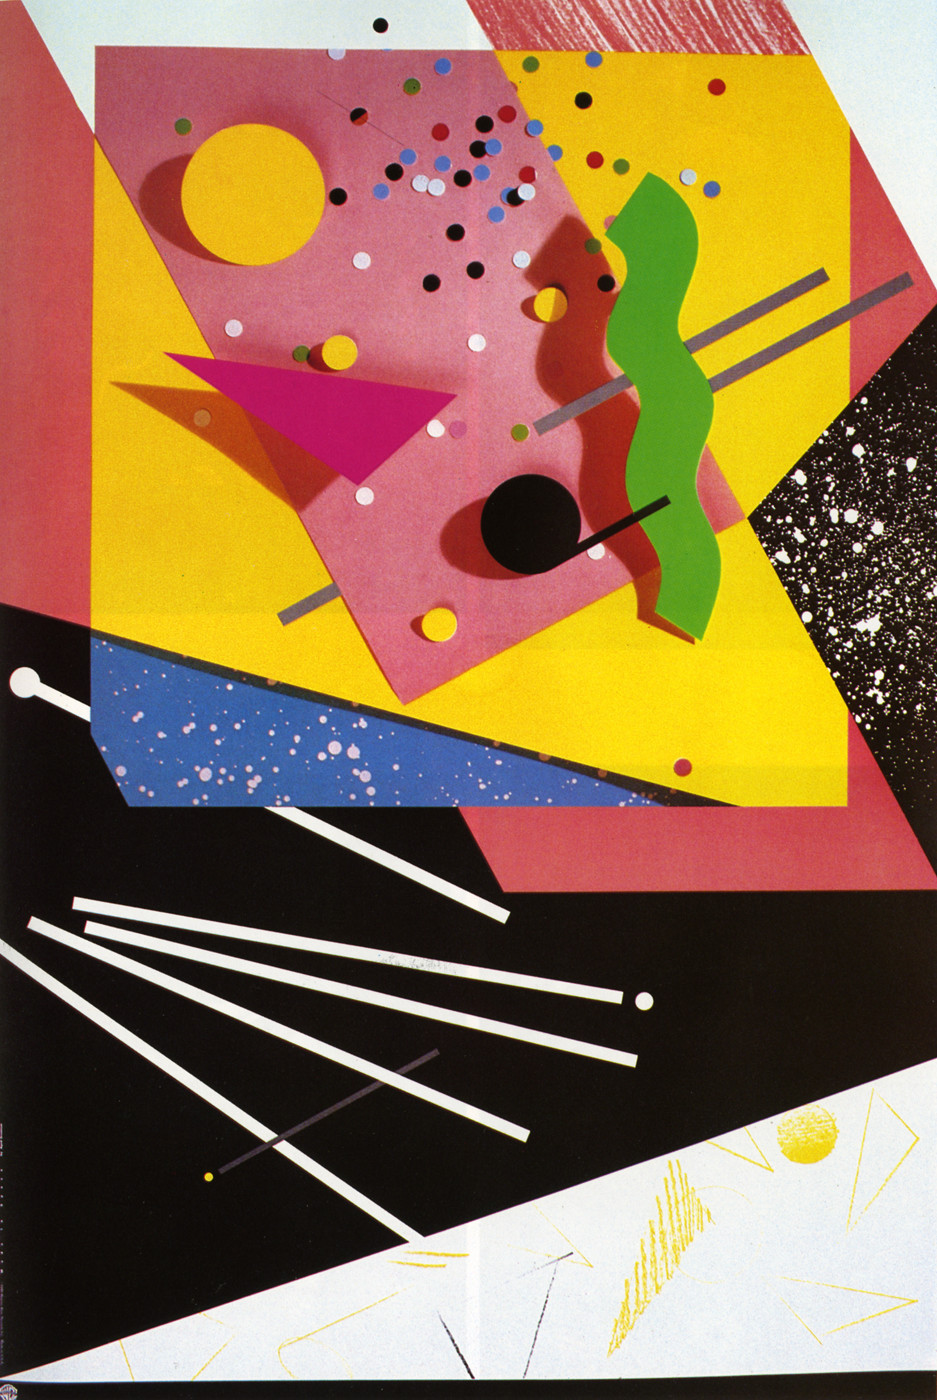 April Greiman - Poster for Warner Records, 1982

via AIGA Design Archives